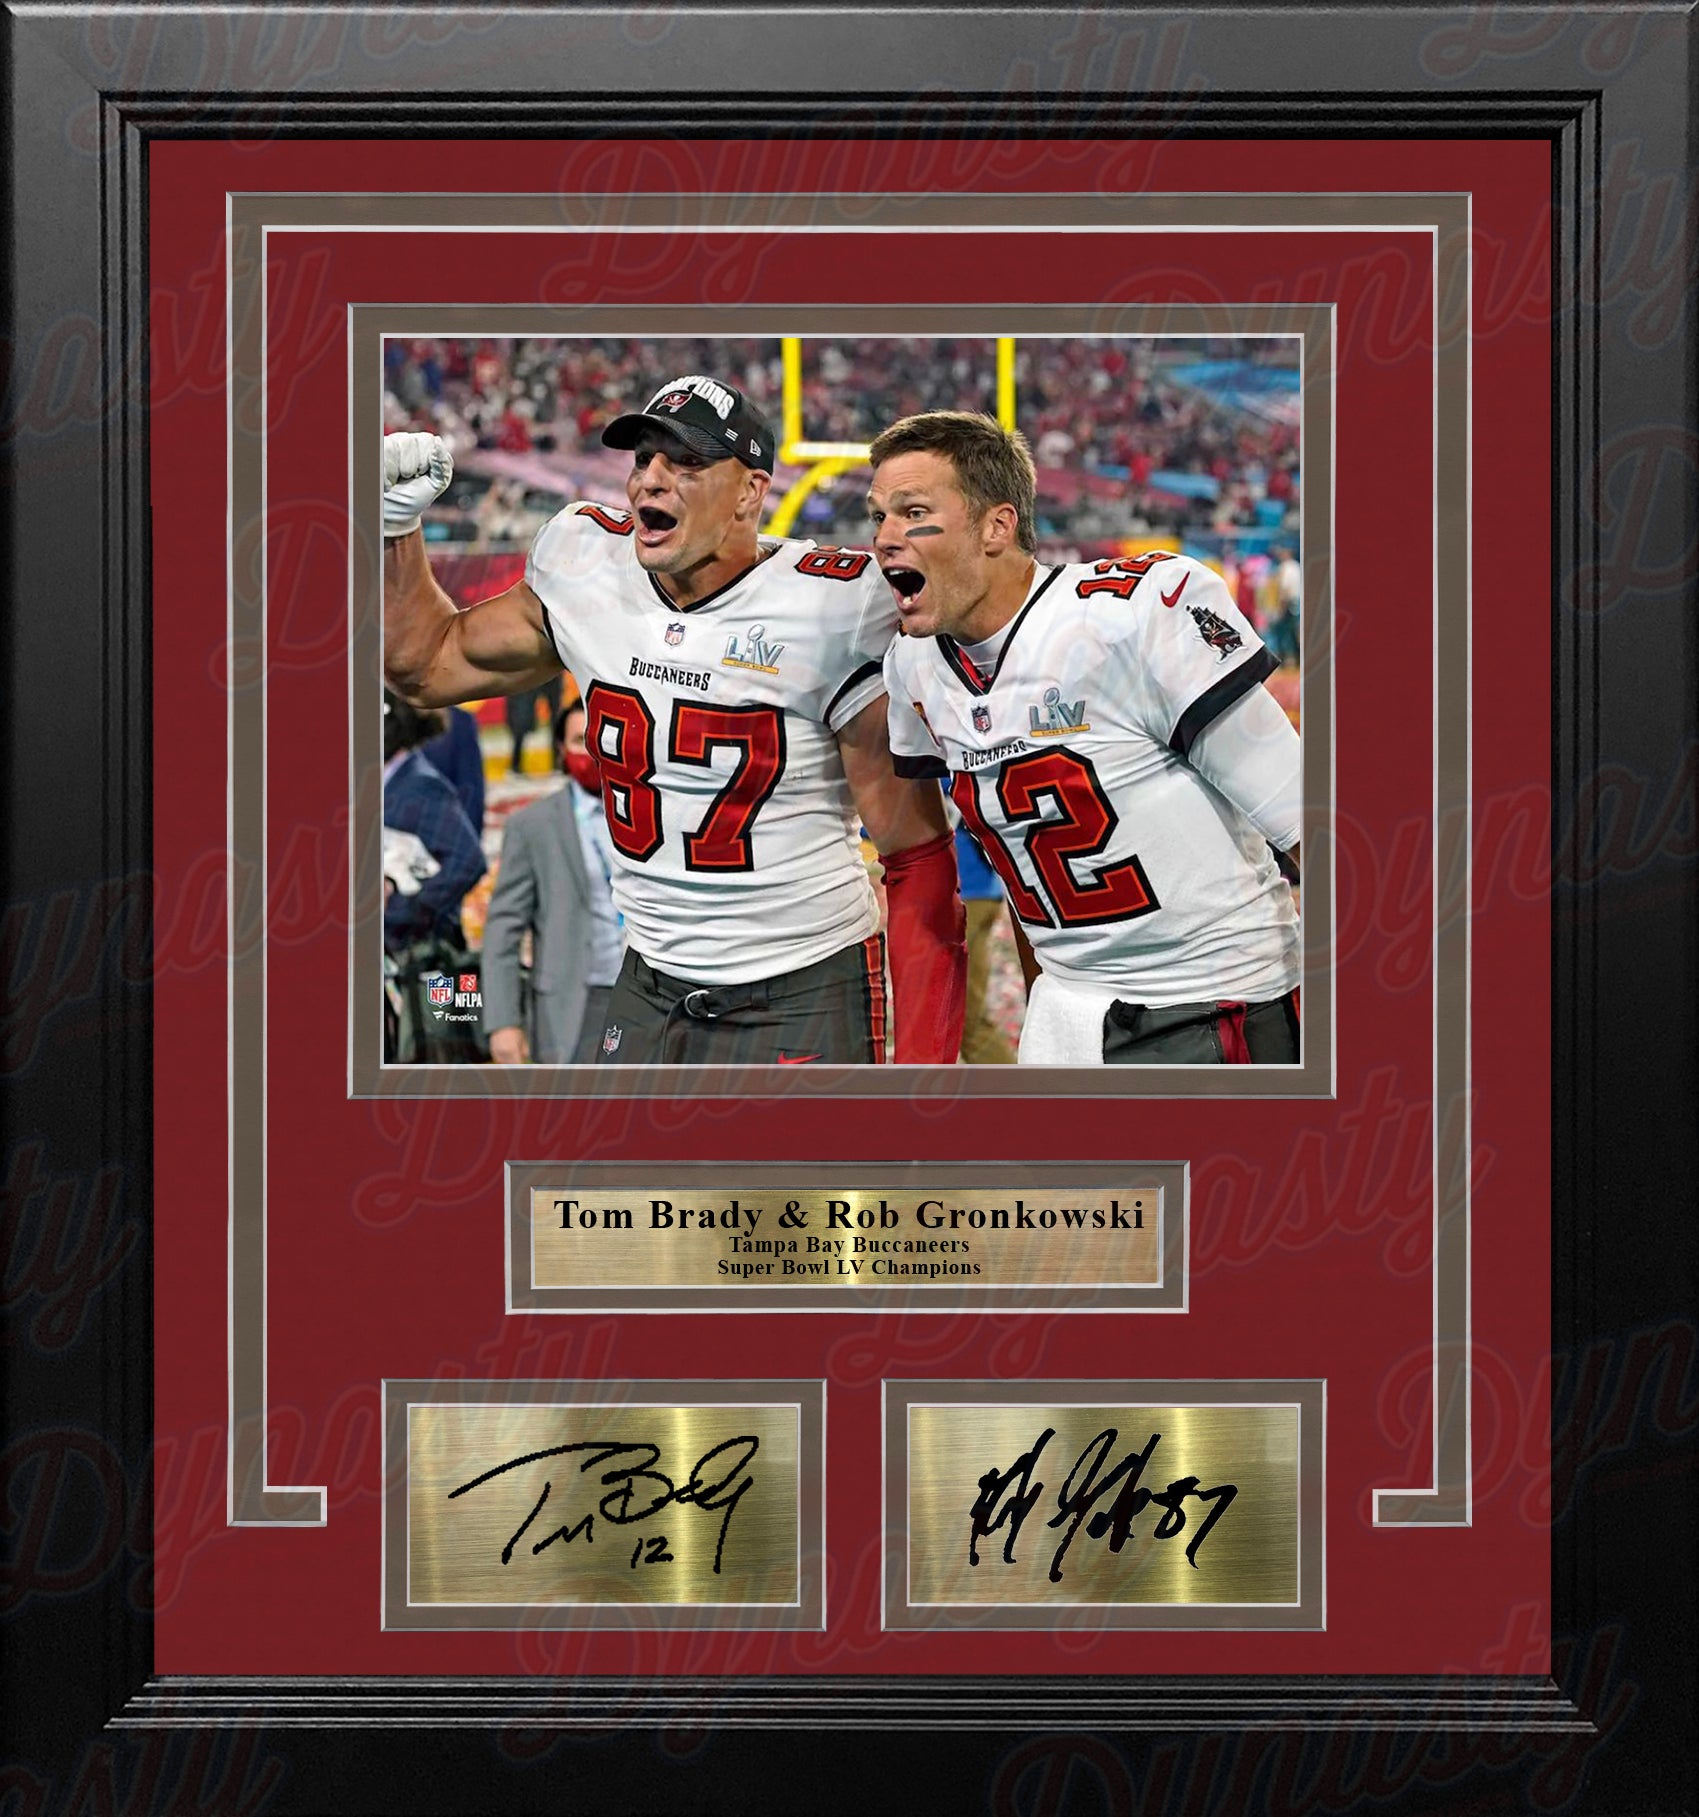 Tom Brady & Rob Gronkowski Super Bowl LV Tampa Bay Buccaneers 8x10 Framed Photo Engraved Autographs - Dynasty Sports & Framing 